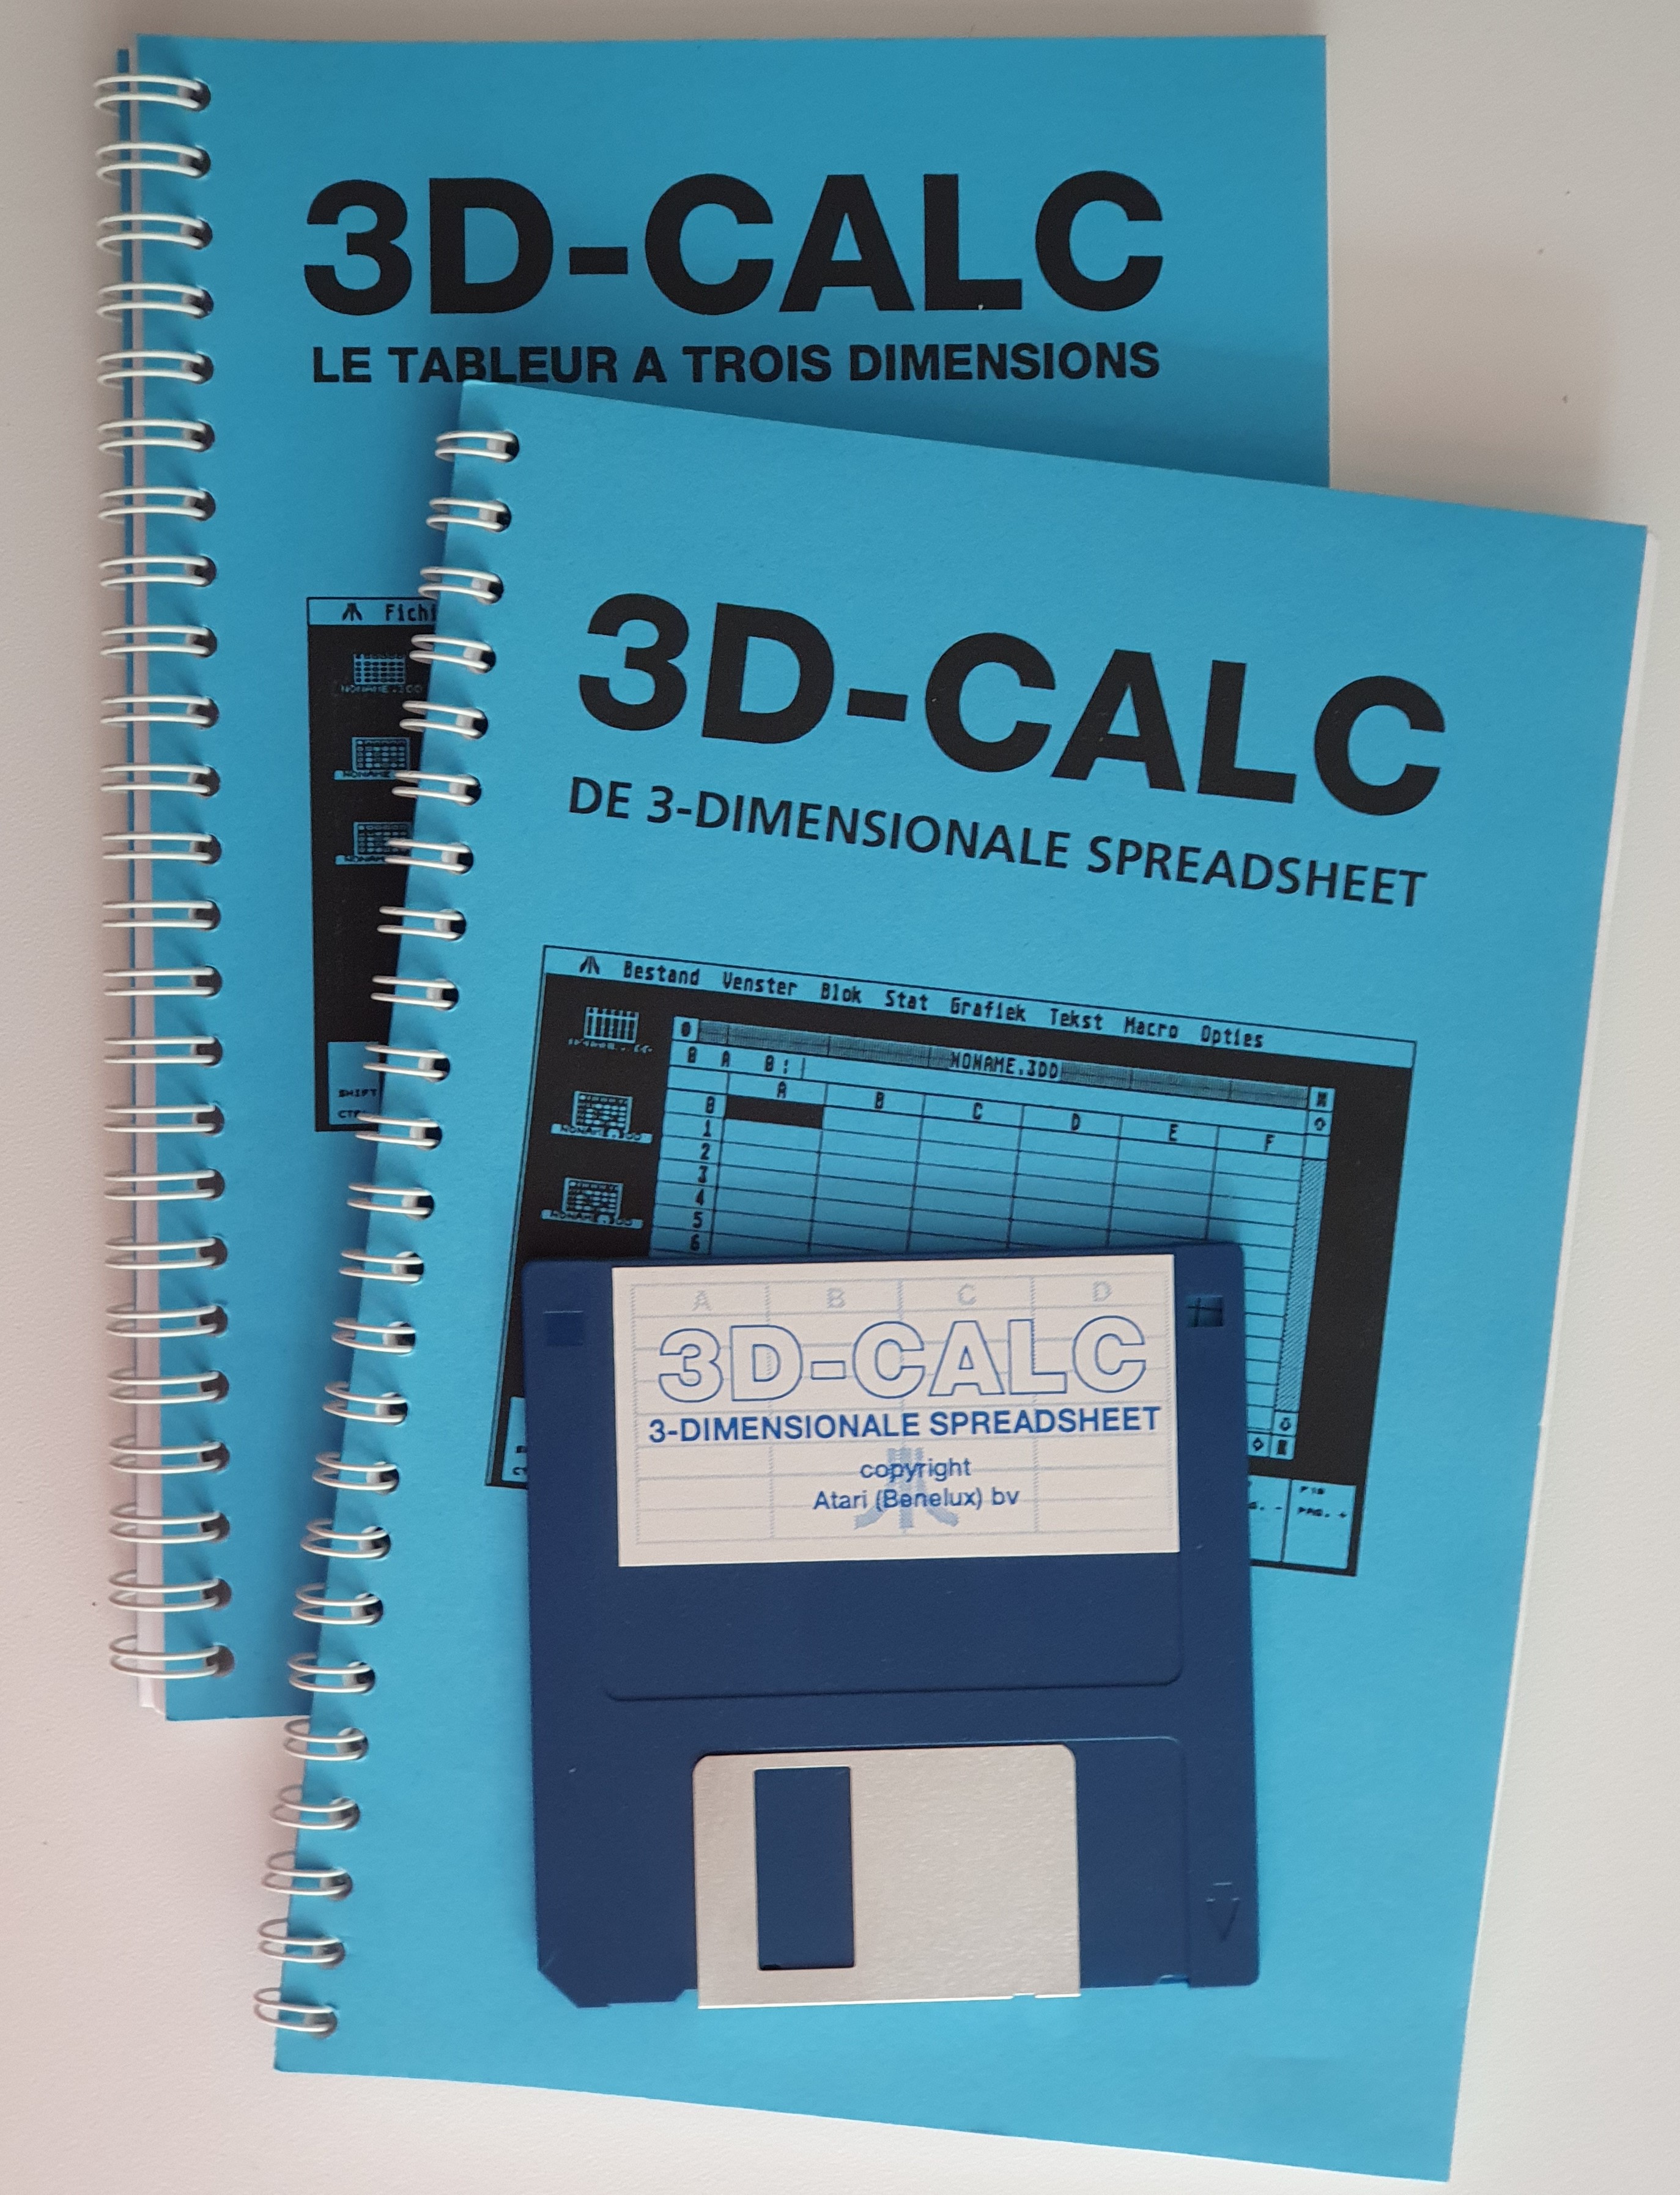 The Atari Benelux release of 3D-Calc.